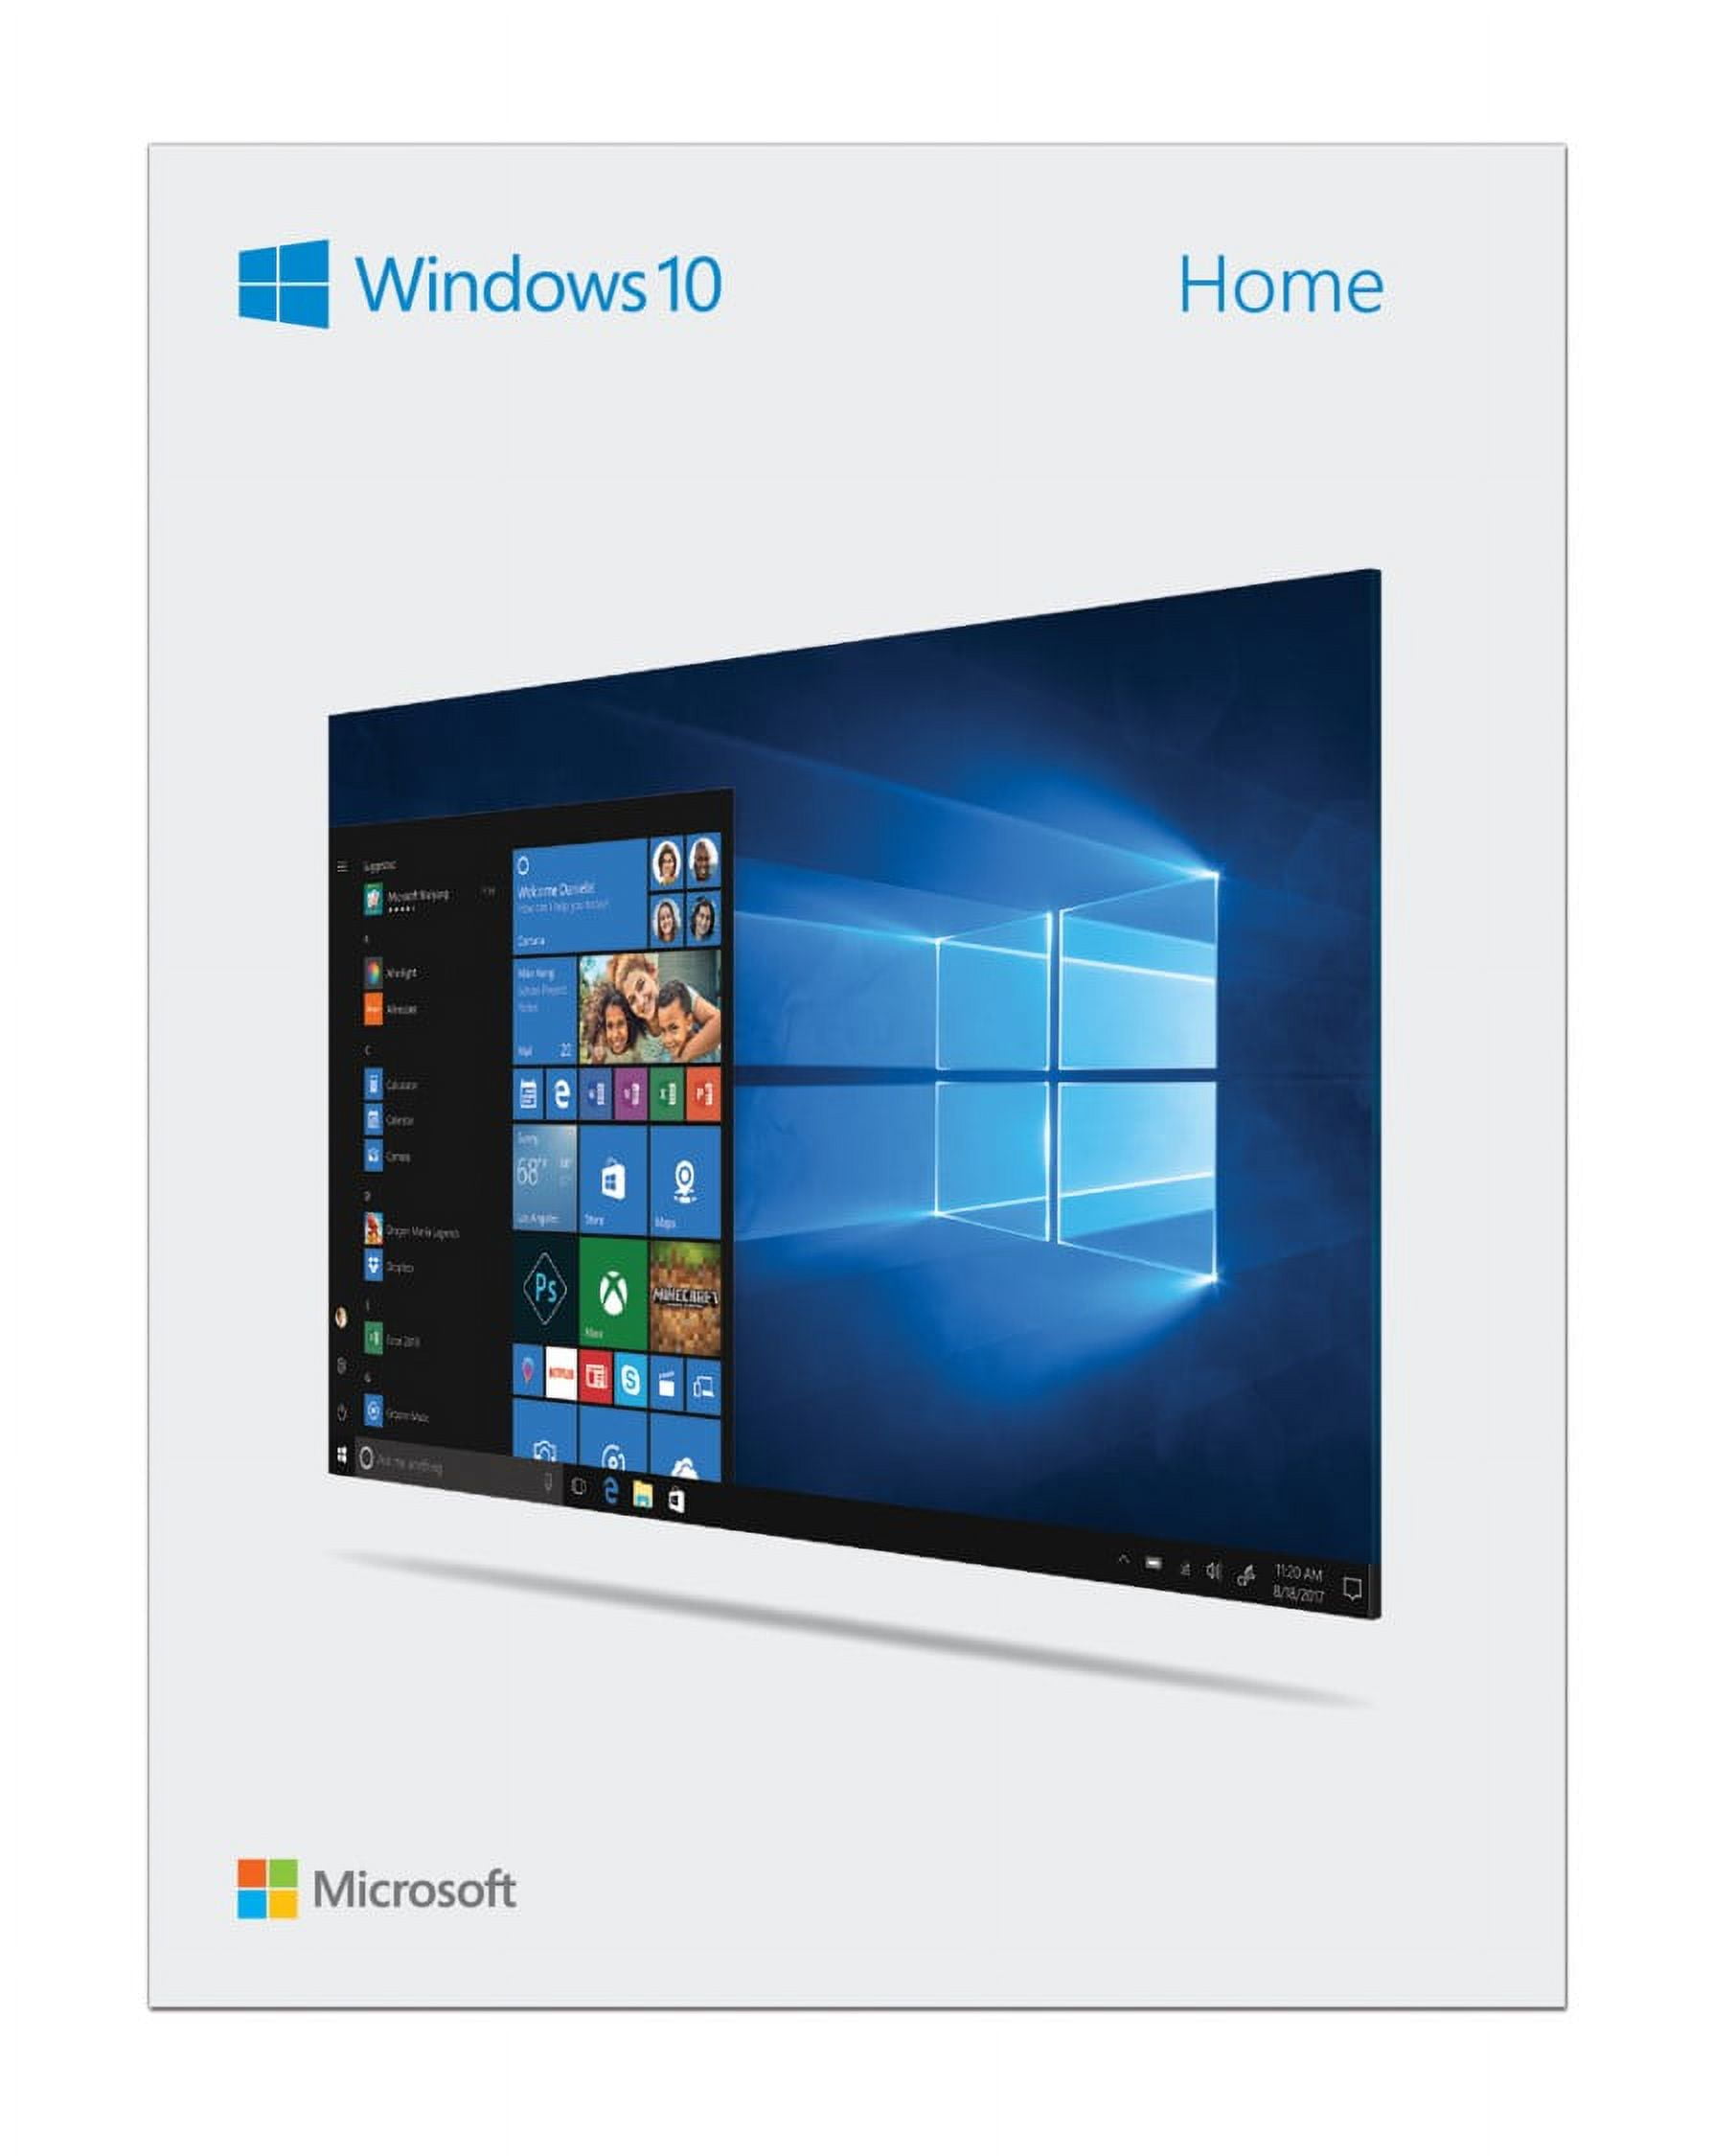 Microsoft Windows 10 Pro 32/64-bit - USB stick version - Windows